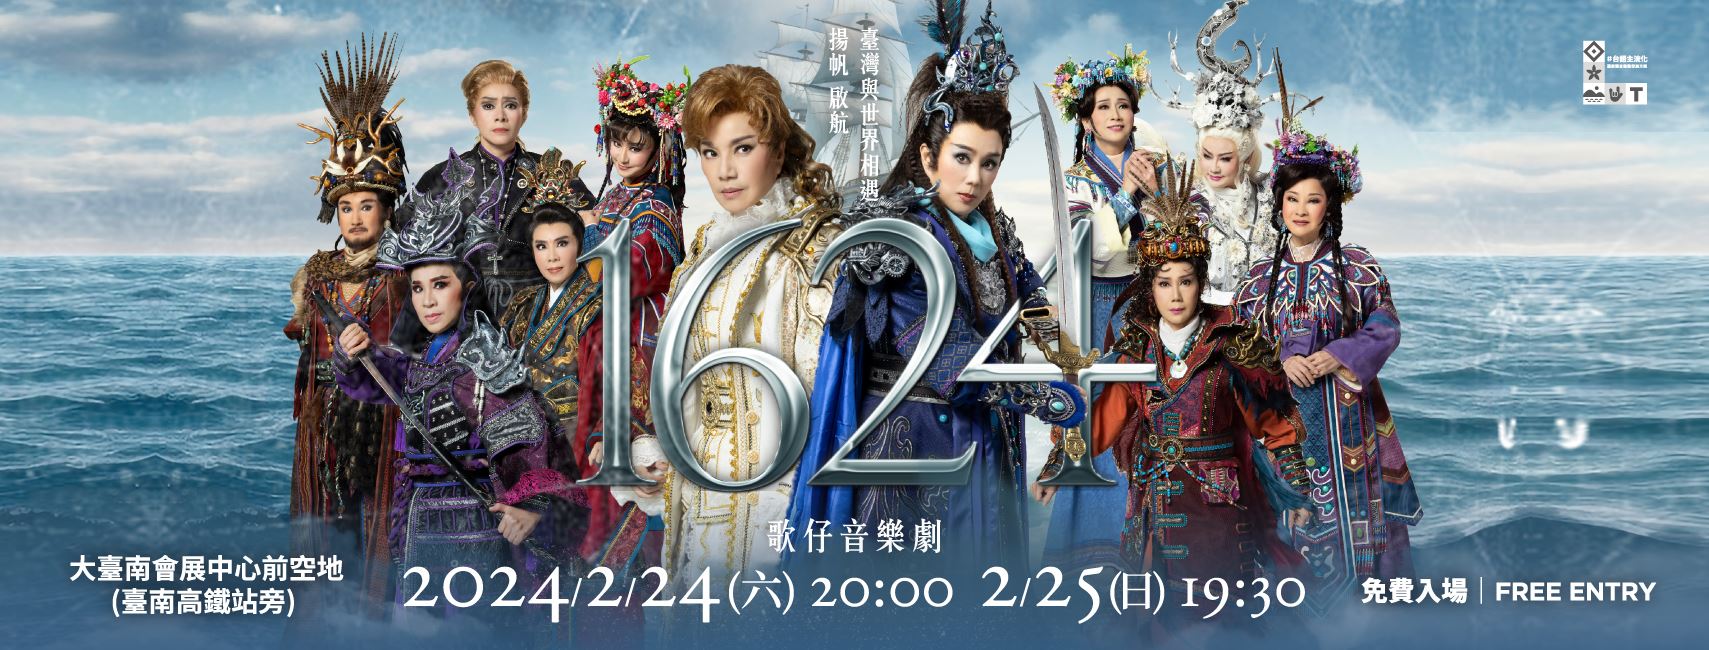 Grand opera show ‘1624’ to retell Taiwan’s history